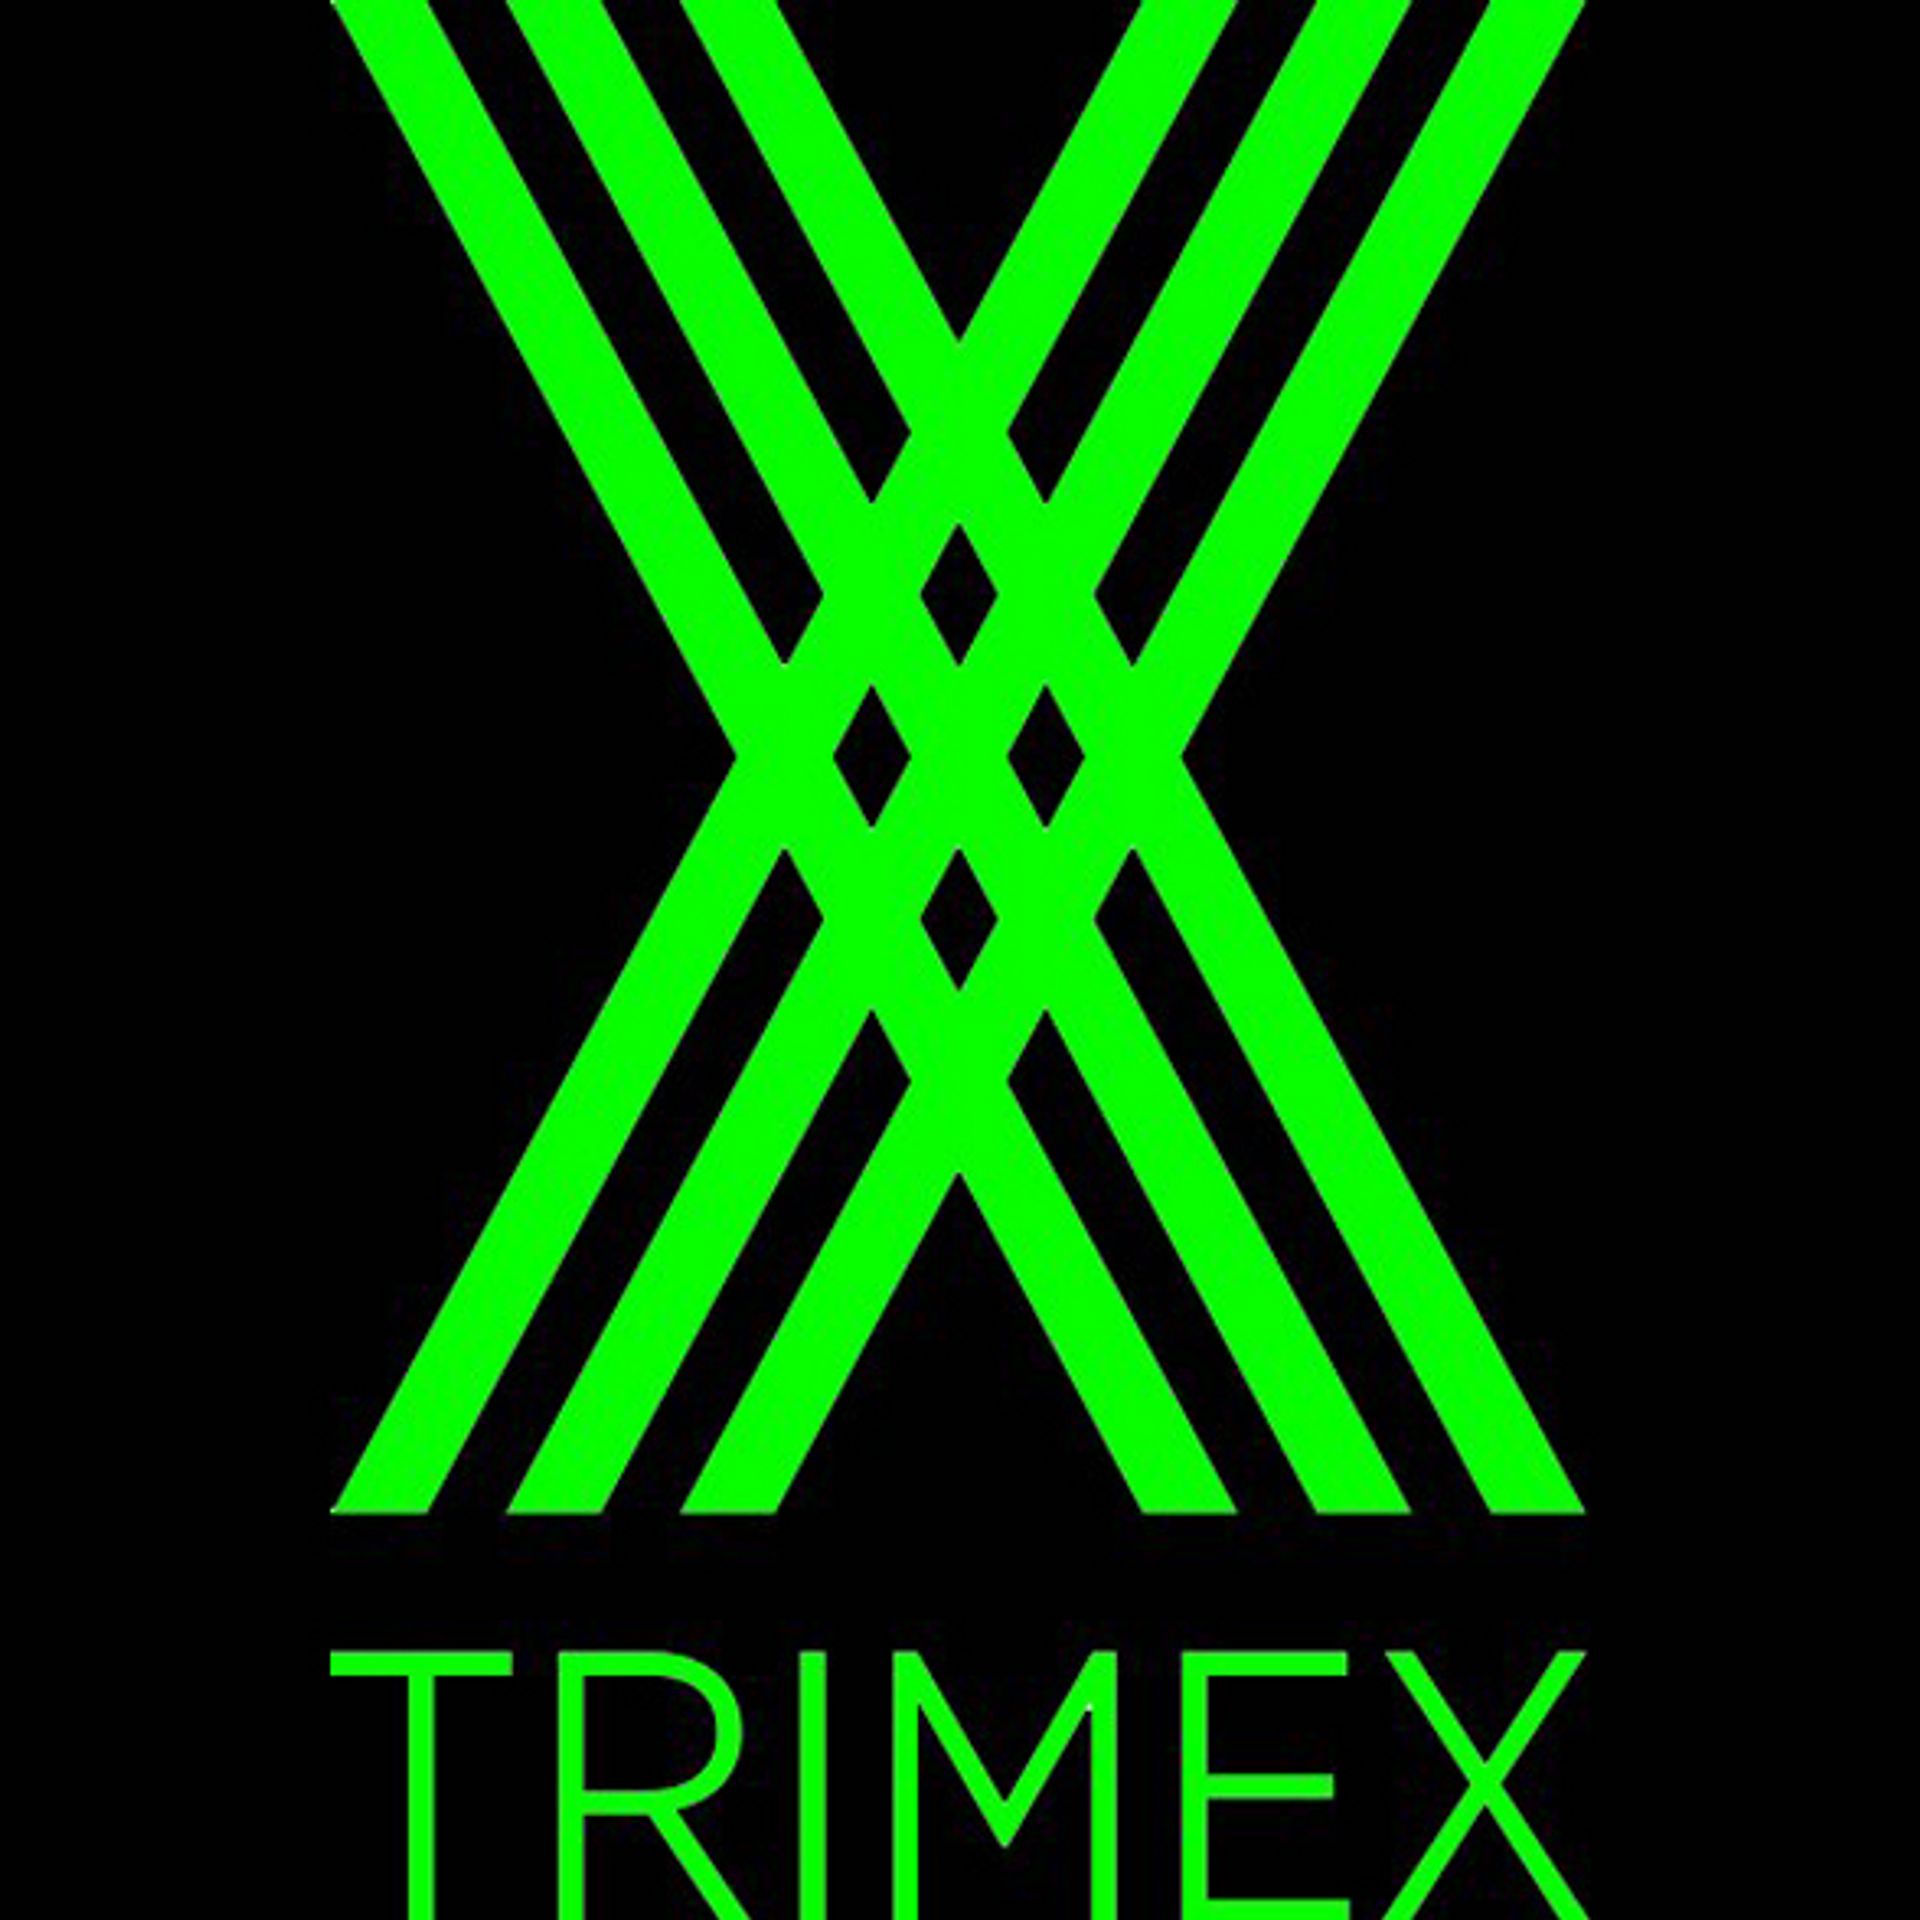 Trimex